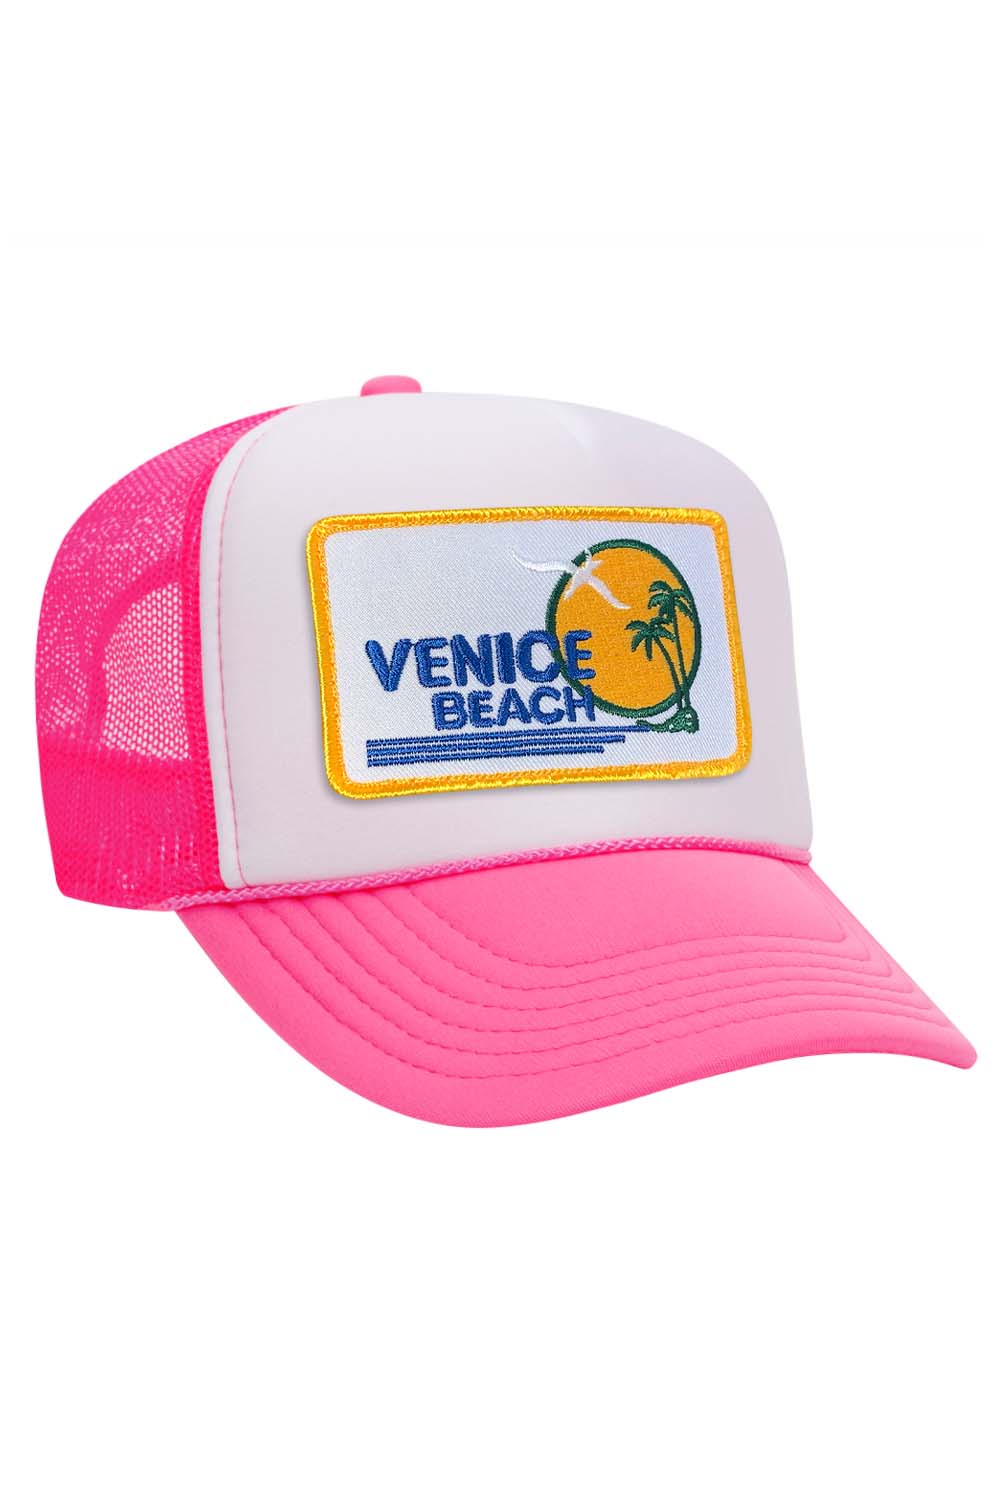 VENICE BEACH VINTAGE TRUCKER HAT HATS Aviator Nation OS NEON PINK // WHITE // NEON PINK 